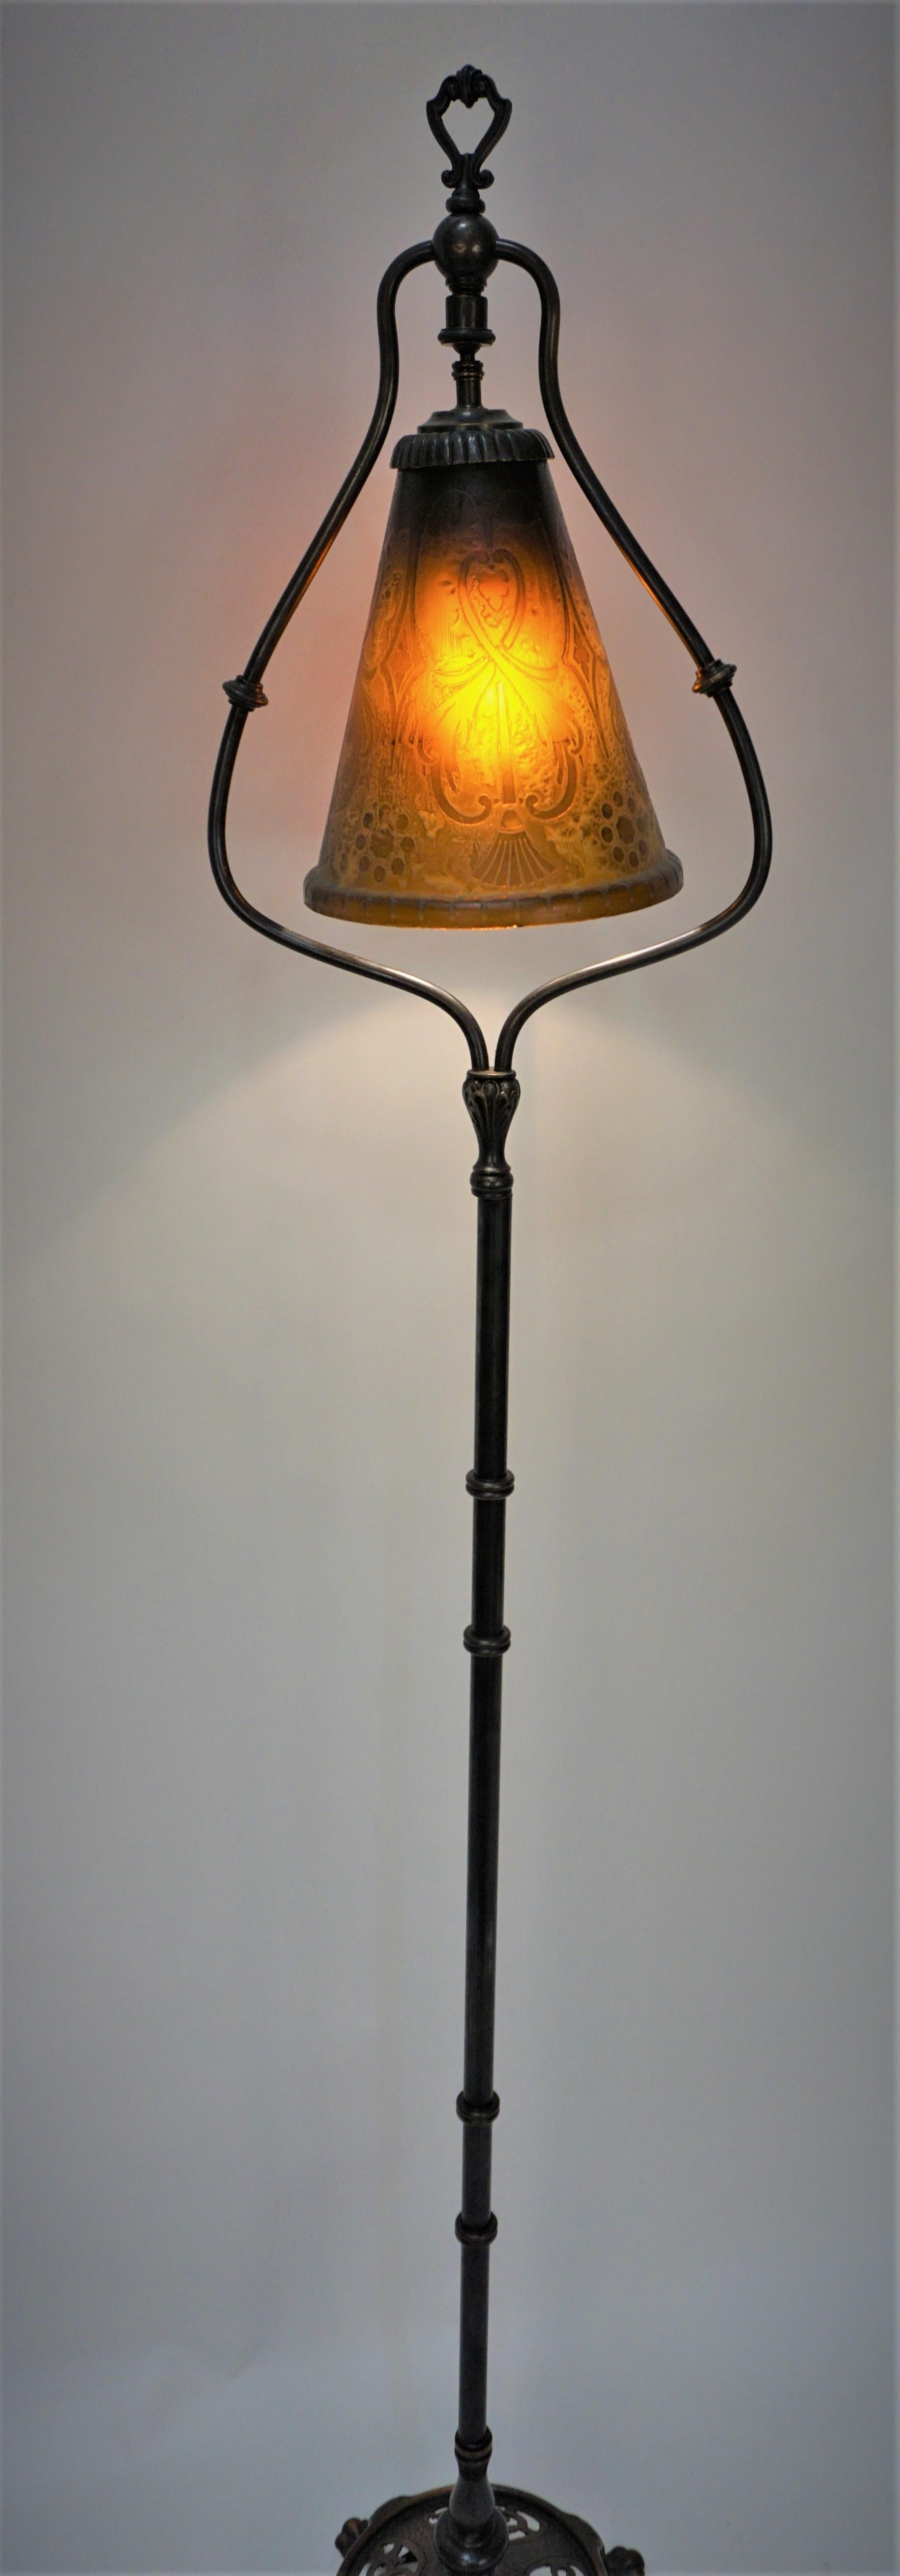 Early 20th Century Art Deco Floor Lamp by Lightolier